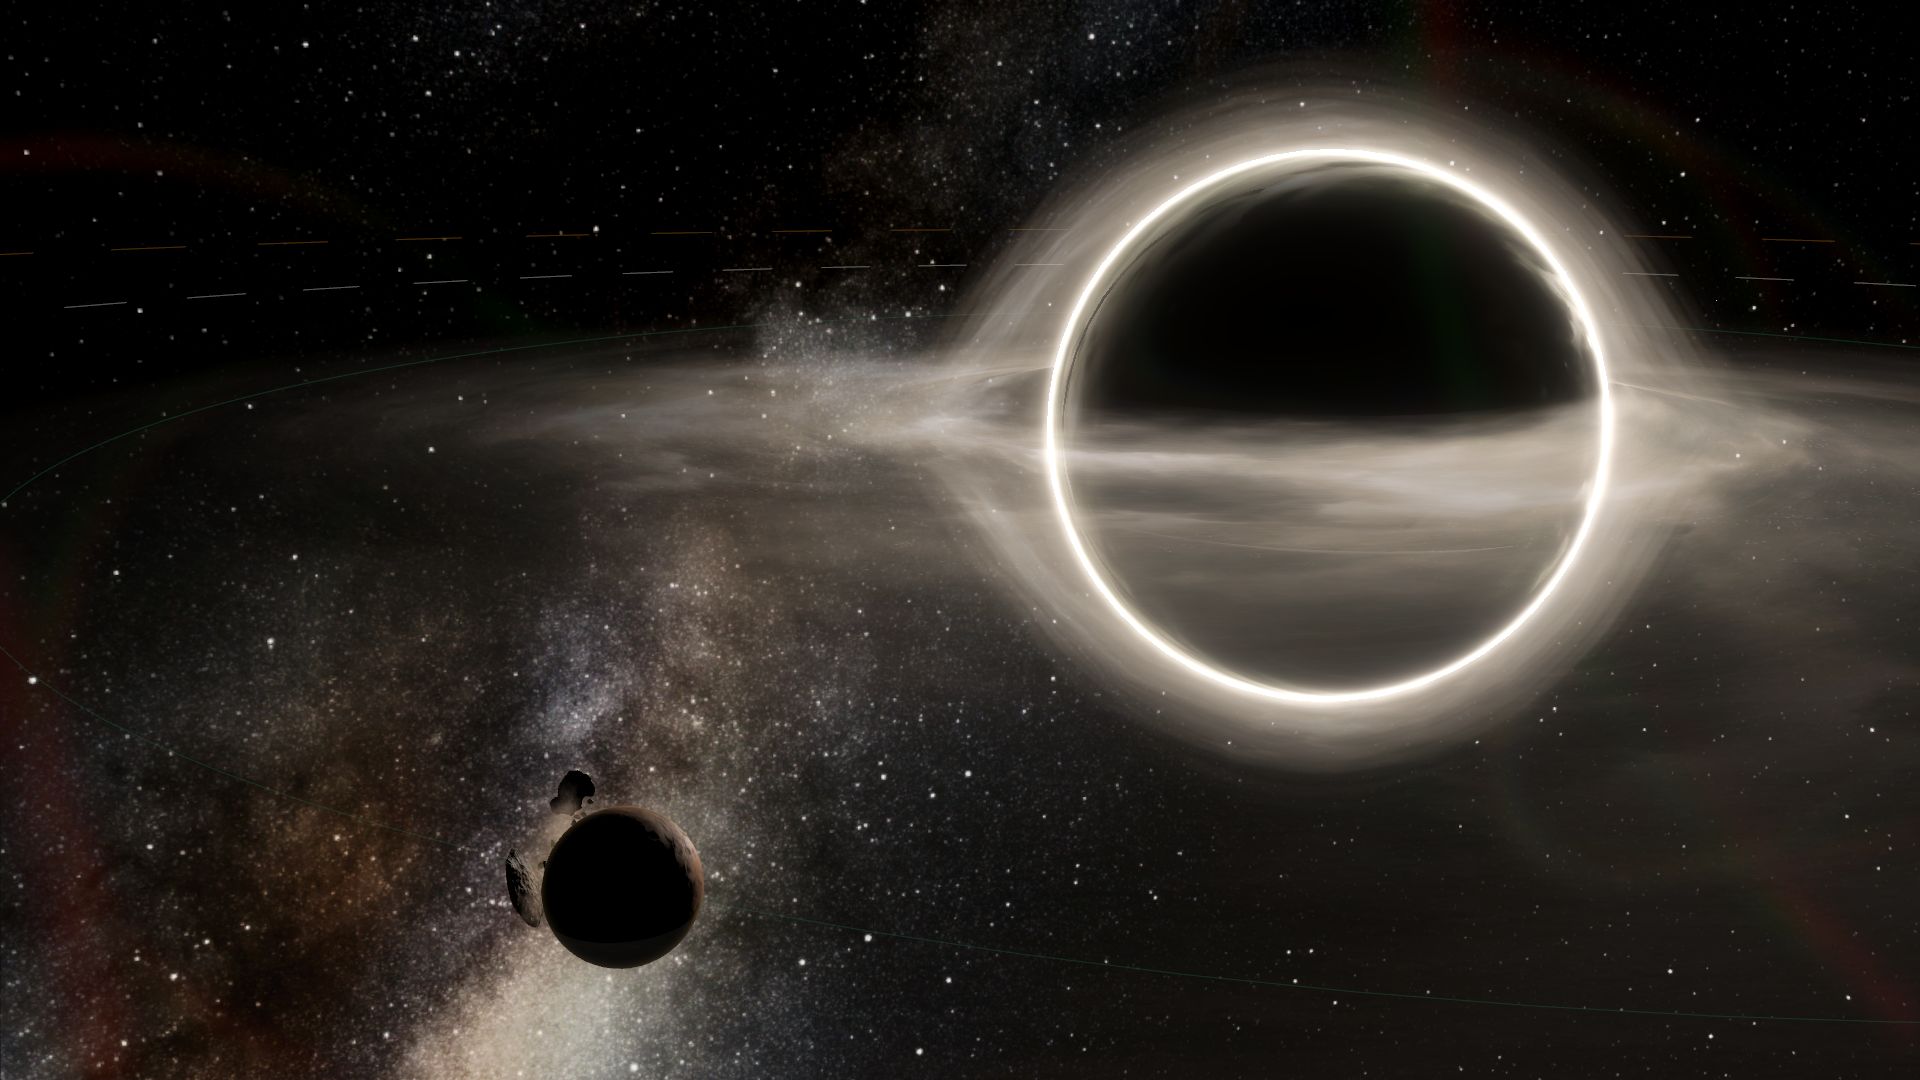 A Stellaris screenshot showing a small planet orbiting a black hole